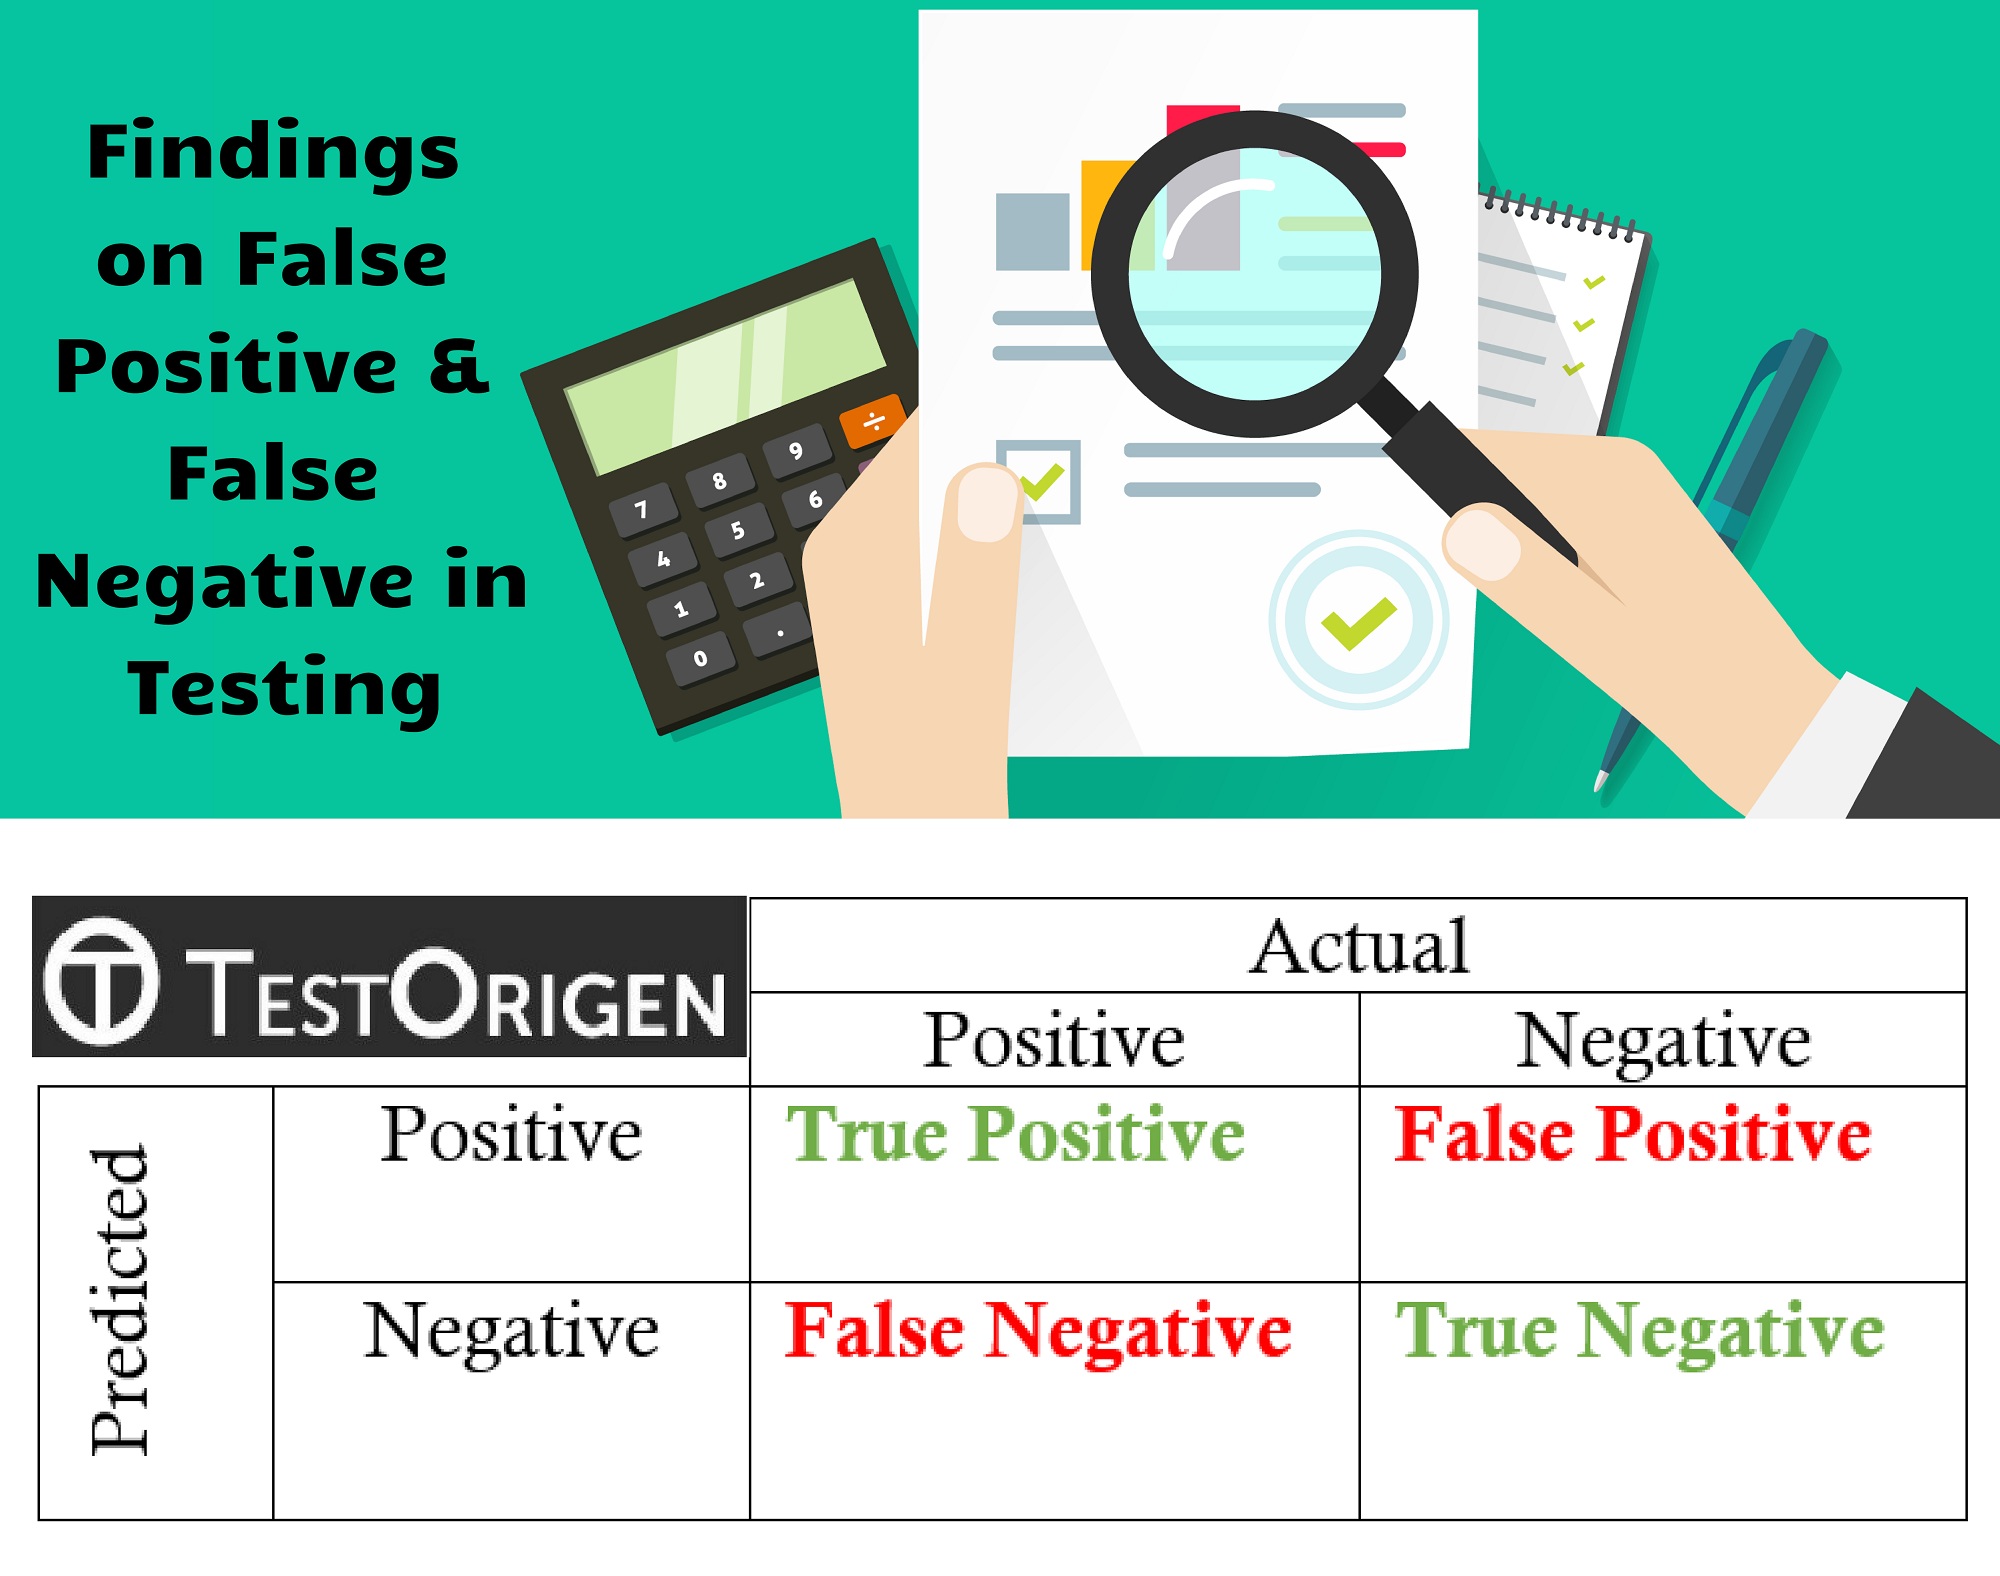 Findings on False Positive & False Negative in Testing